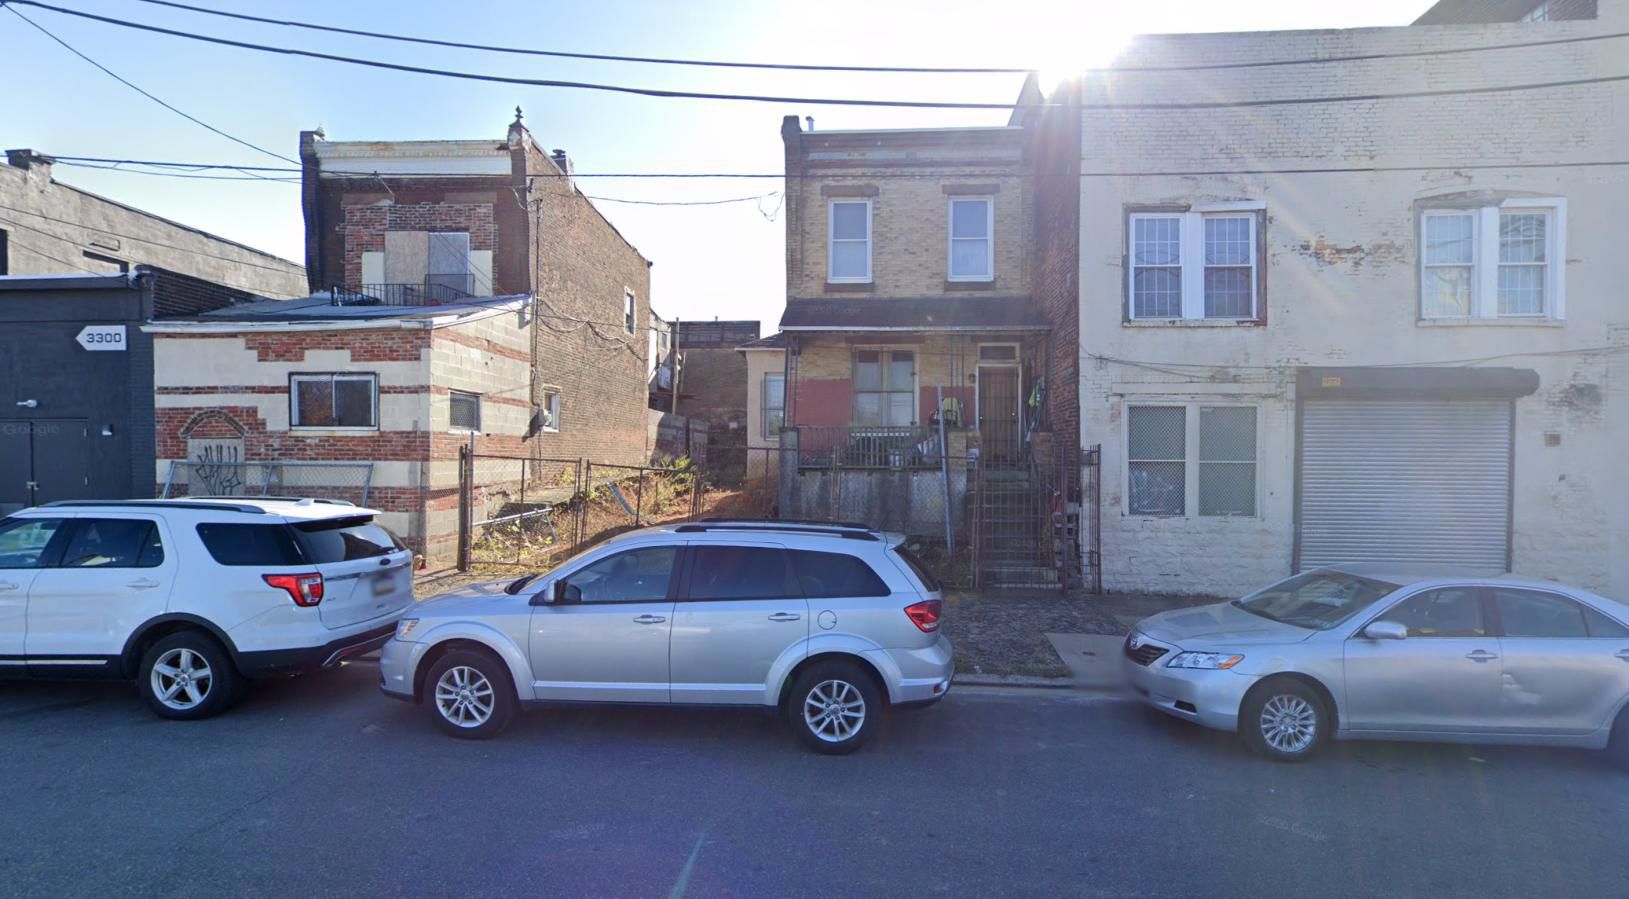 3308 Fairmount Avenue. Zoning table. Credit: Google Maps via Haverford Square Designs via the City of Philadelphia